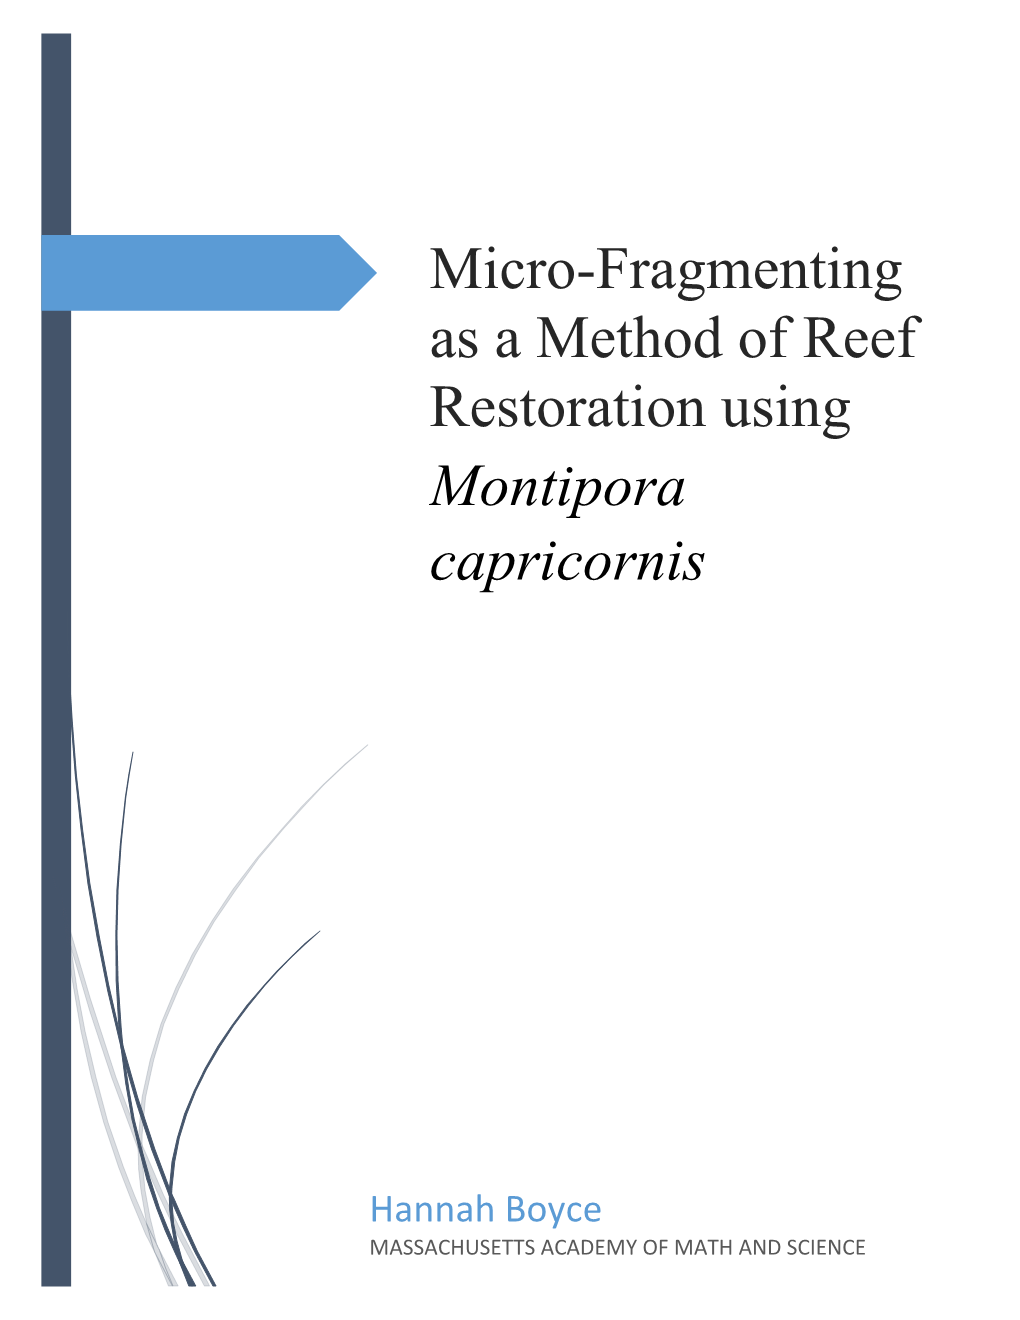 Micro-Fragmenting As a Method of Reef Restoration Using Montipora Capricornis